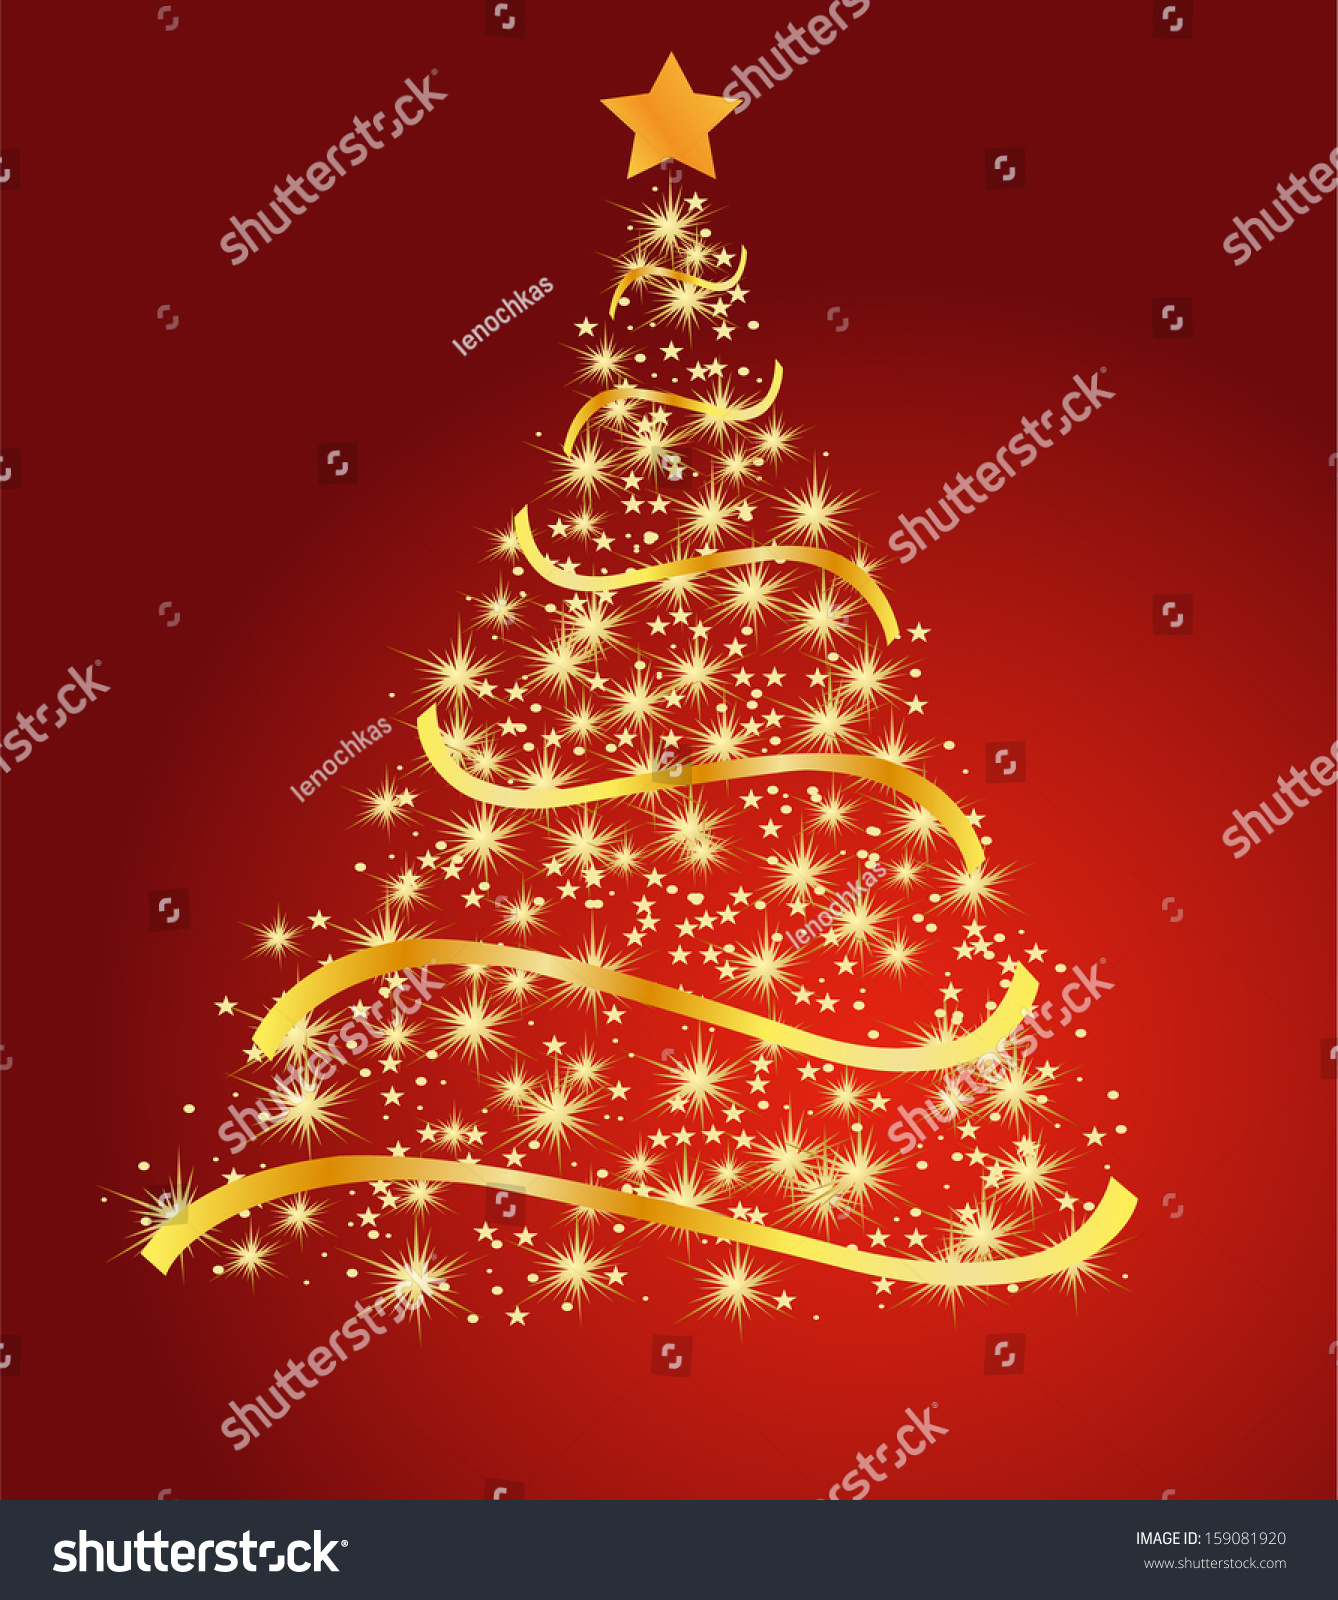 Golden Fir On Red Background Christmas Stock Vector 159081920 ...